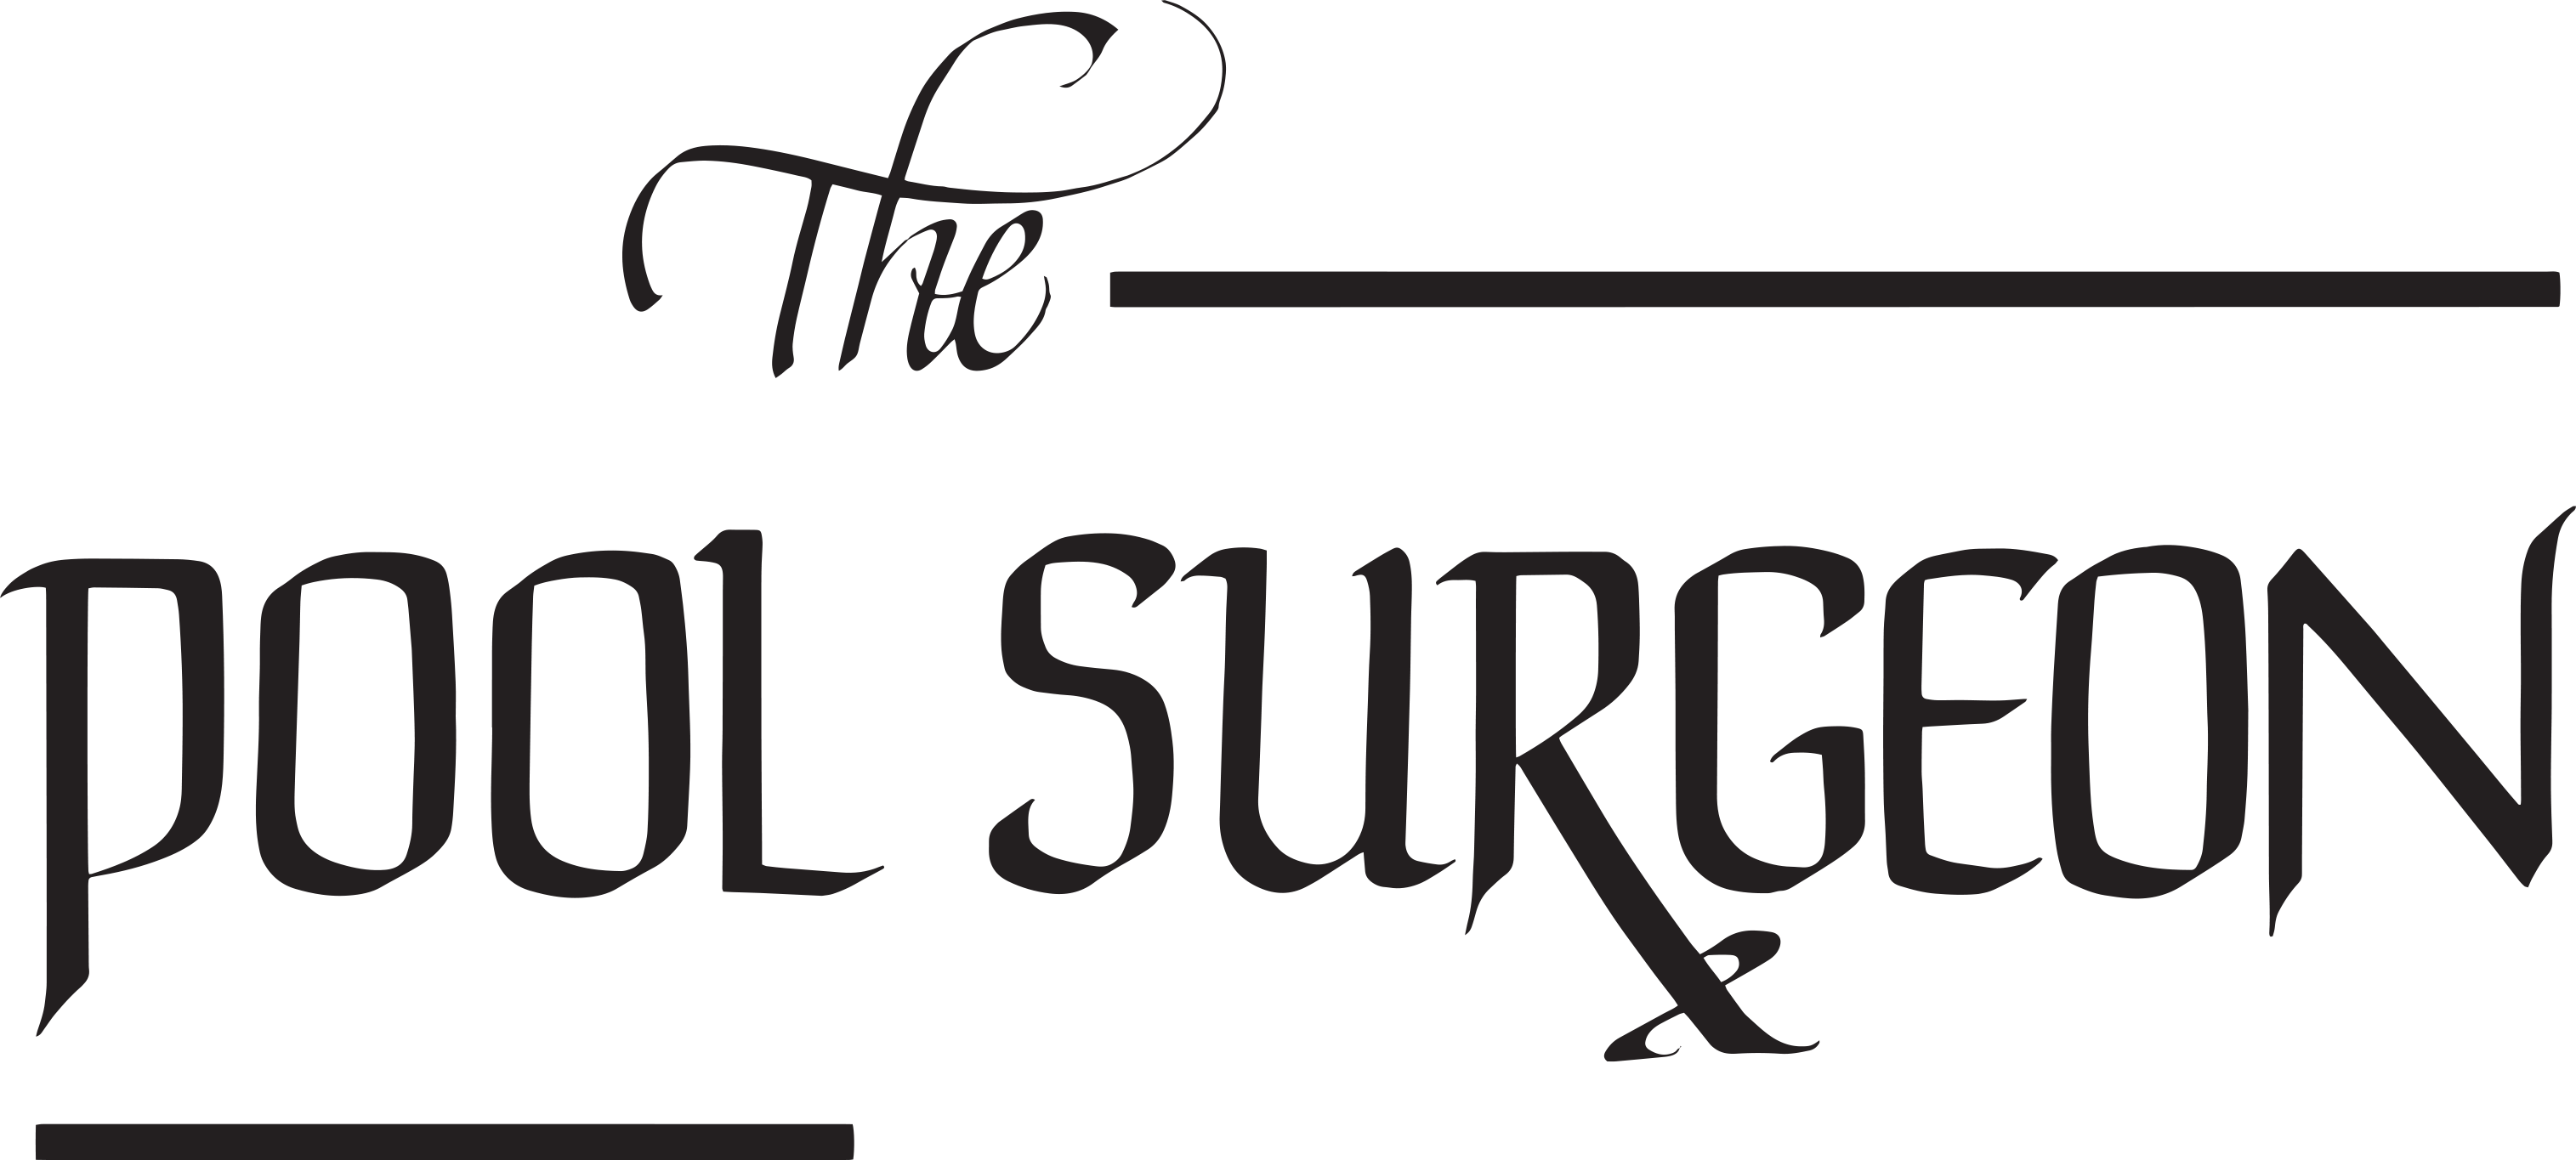 The Pool Surgeon logo 